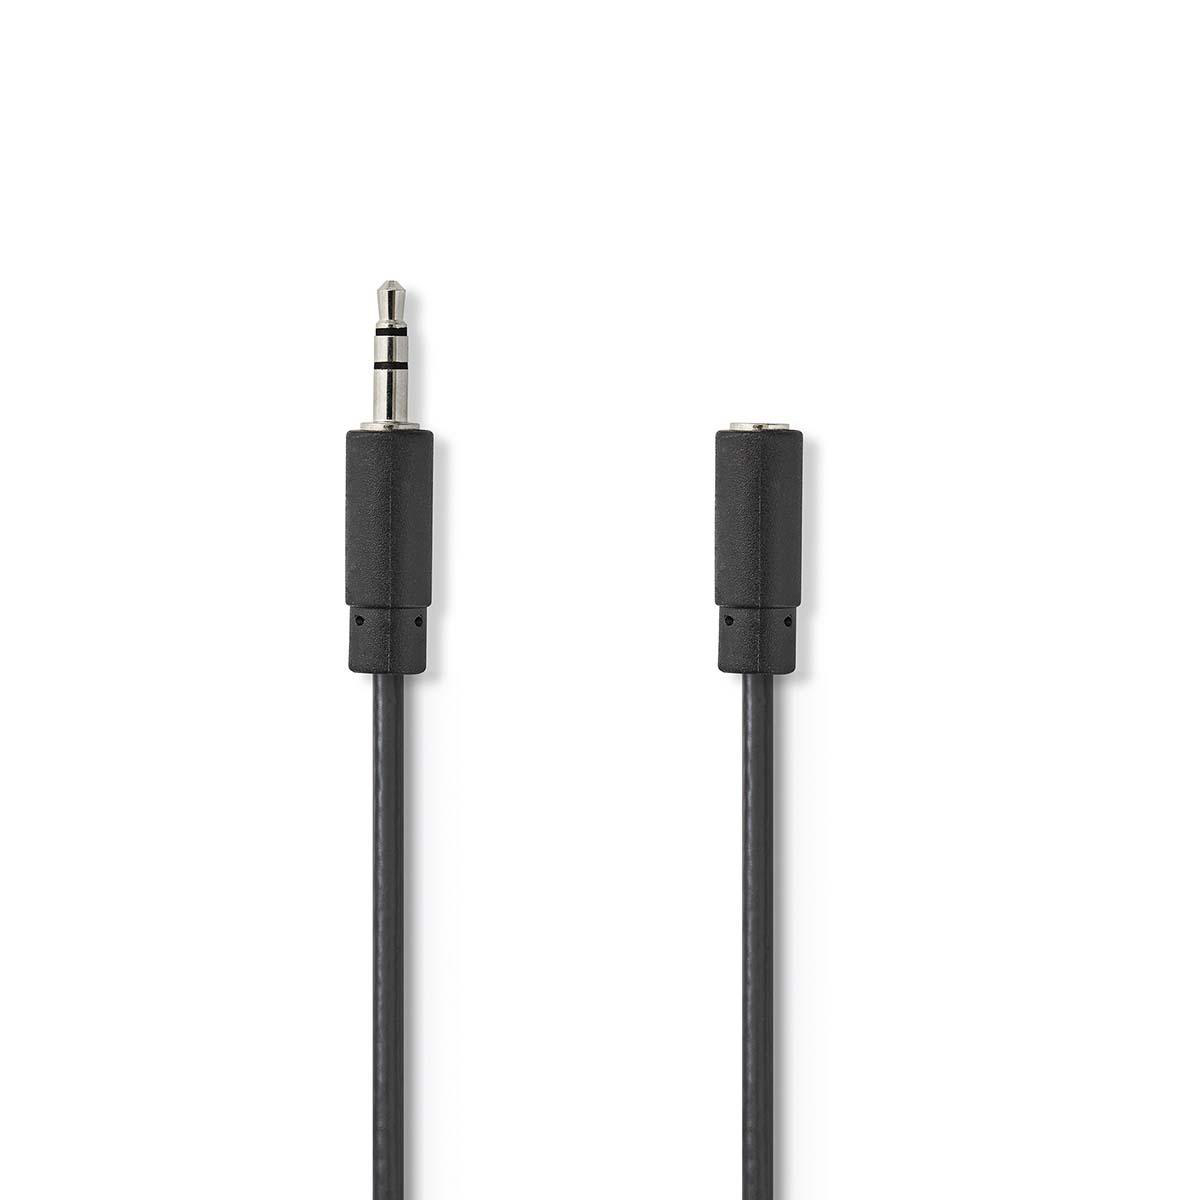 Nedis Stereo Audio kabel, 3.5 mm Male - 3.5 mm Female, 10m, zwart